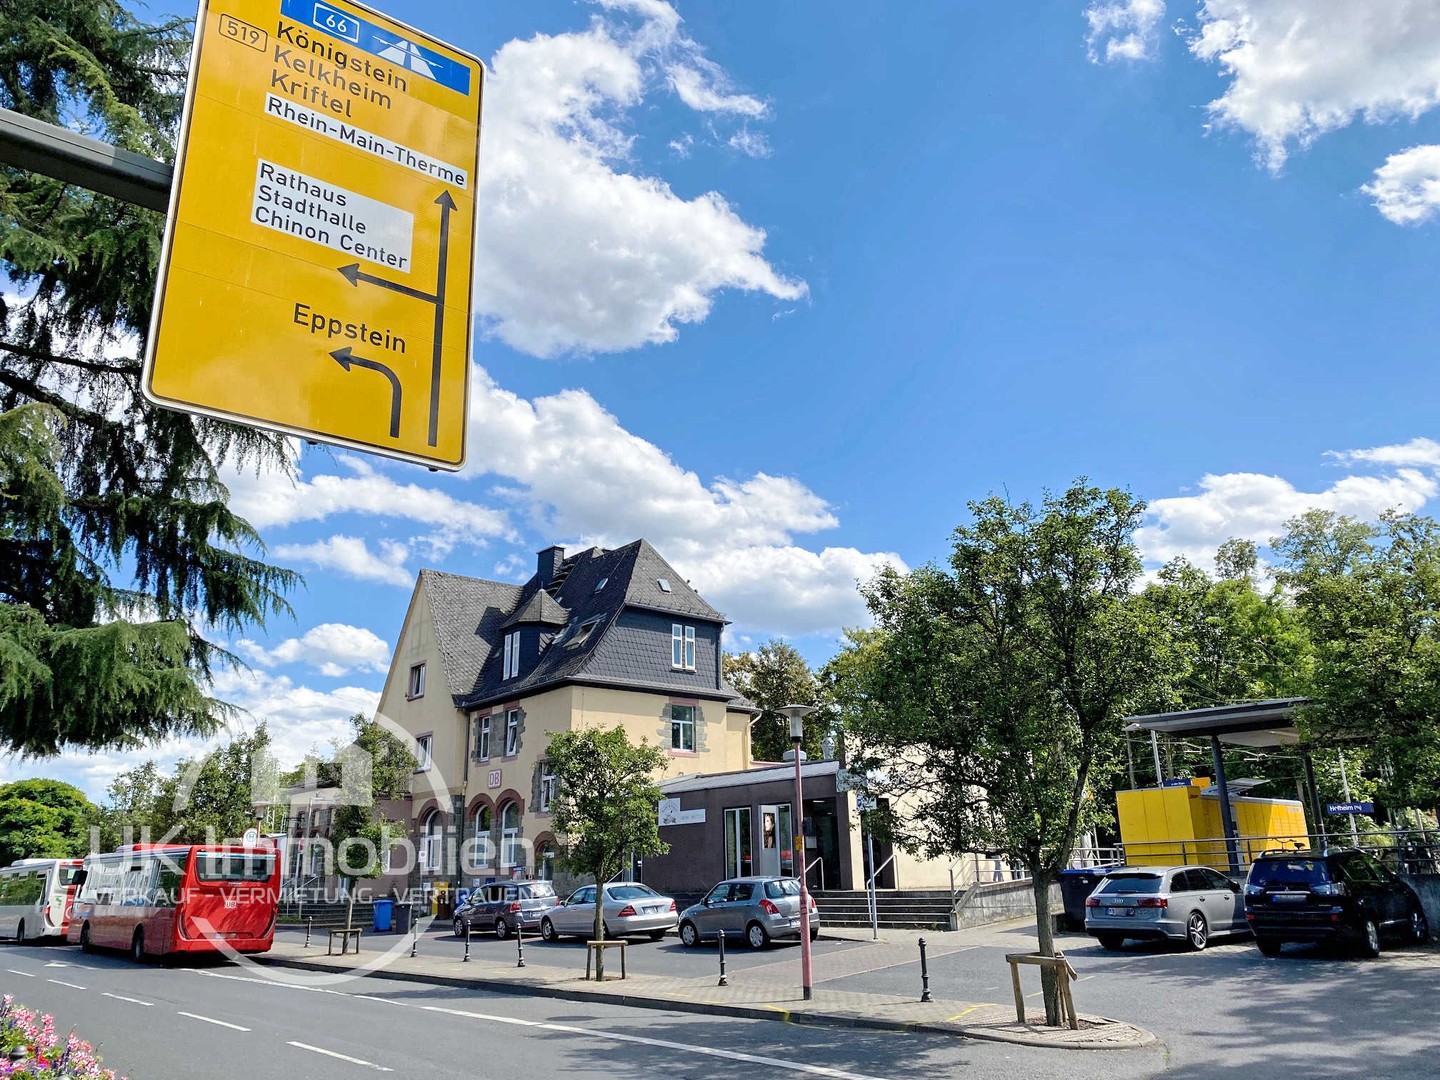 Immobilienmakler-Frankfurt-Hofheim-Kreisel-B519-HattersheimerStraßeS-Bahnhof-Hofheim-Taunus.jpg